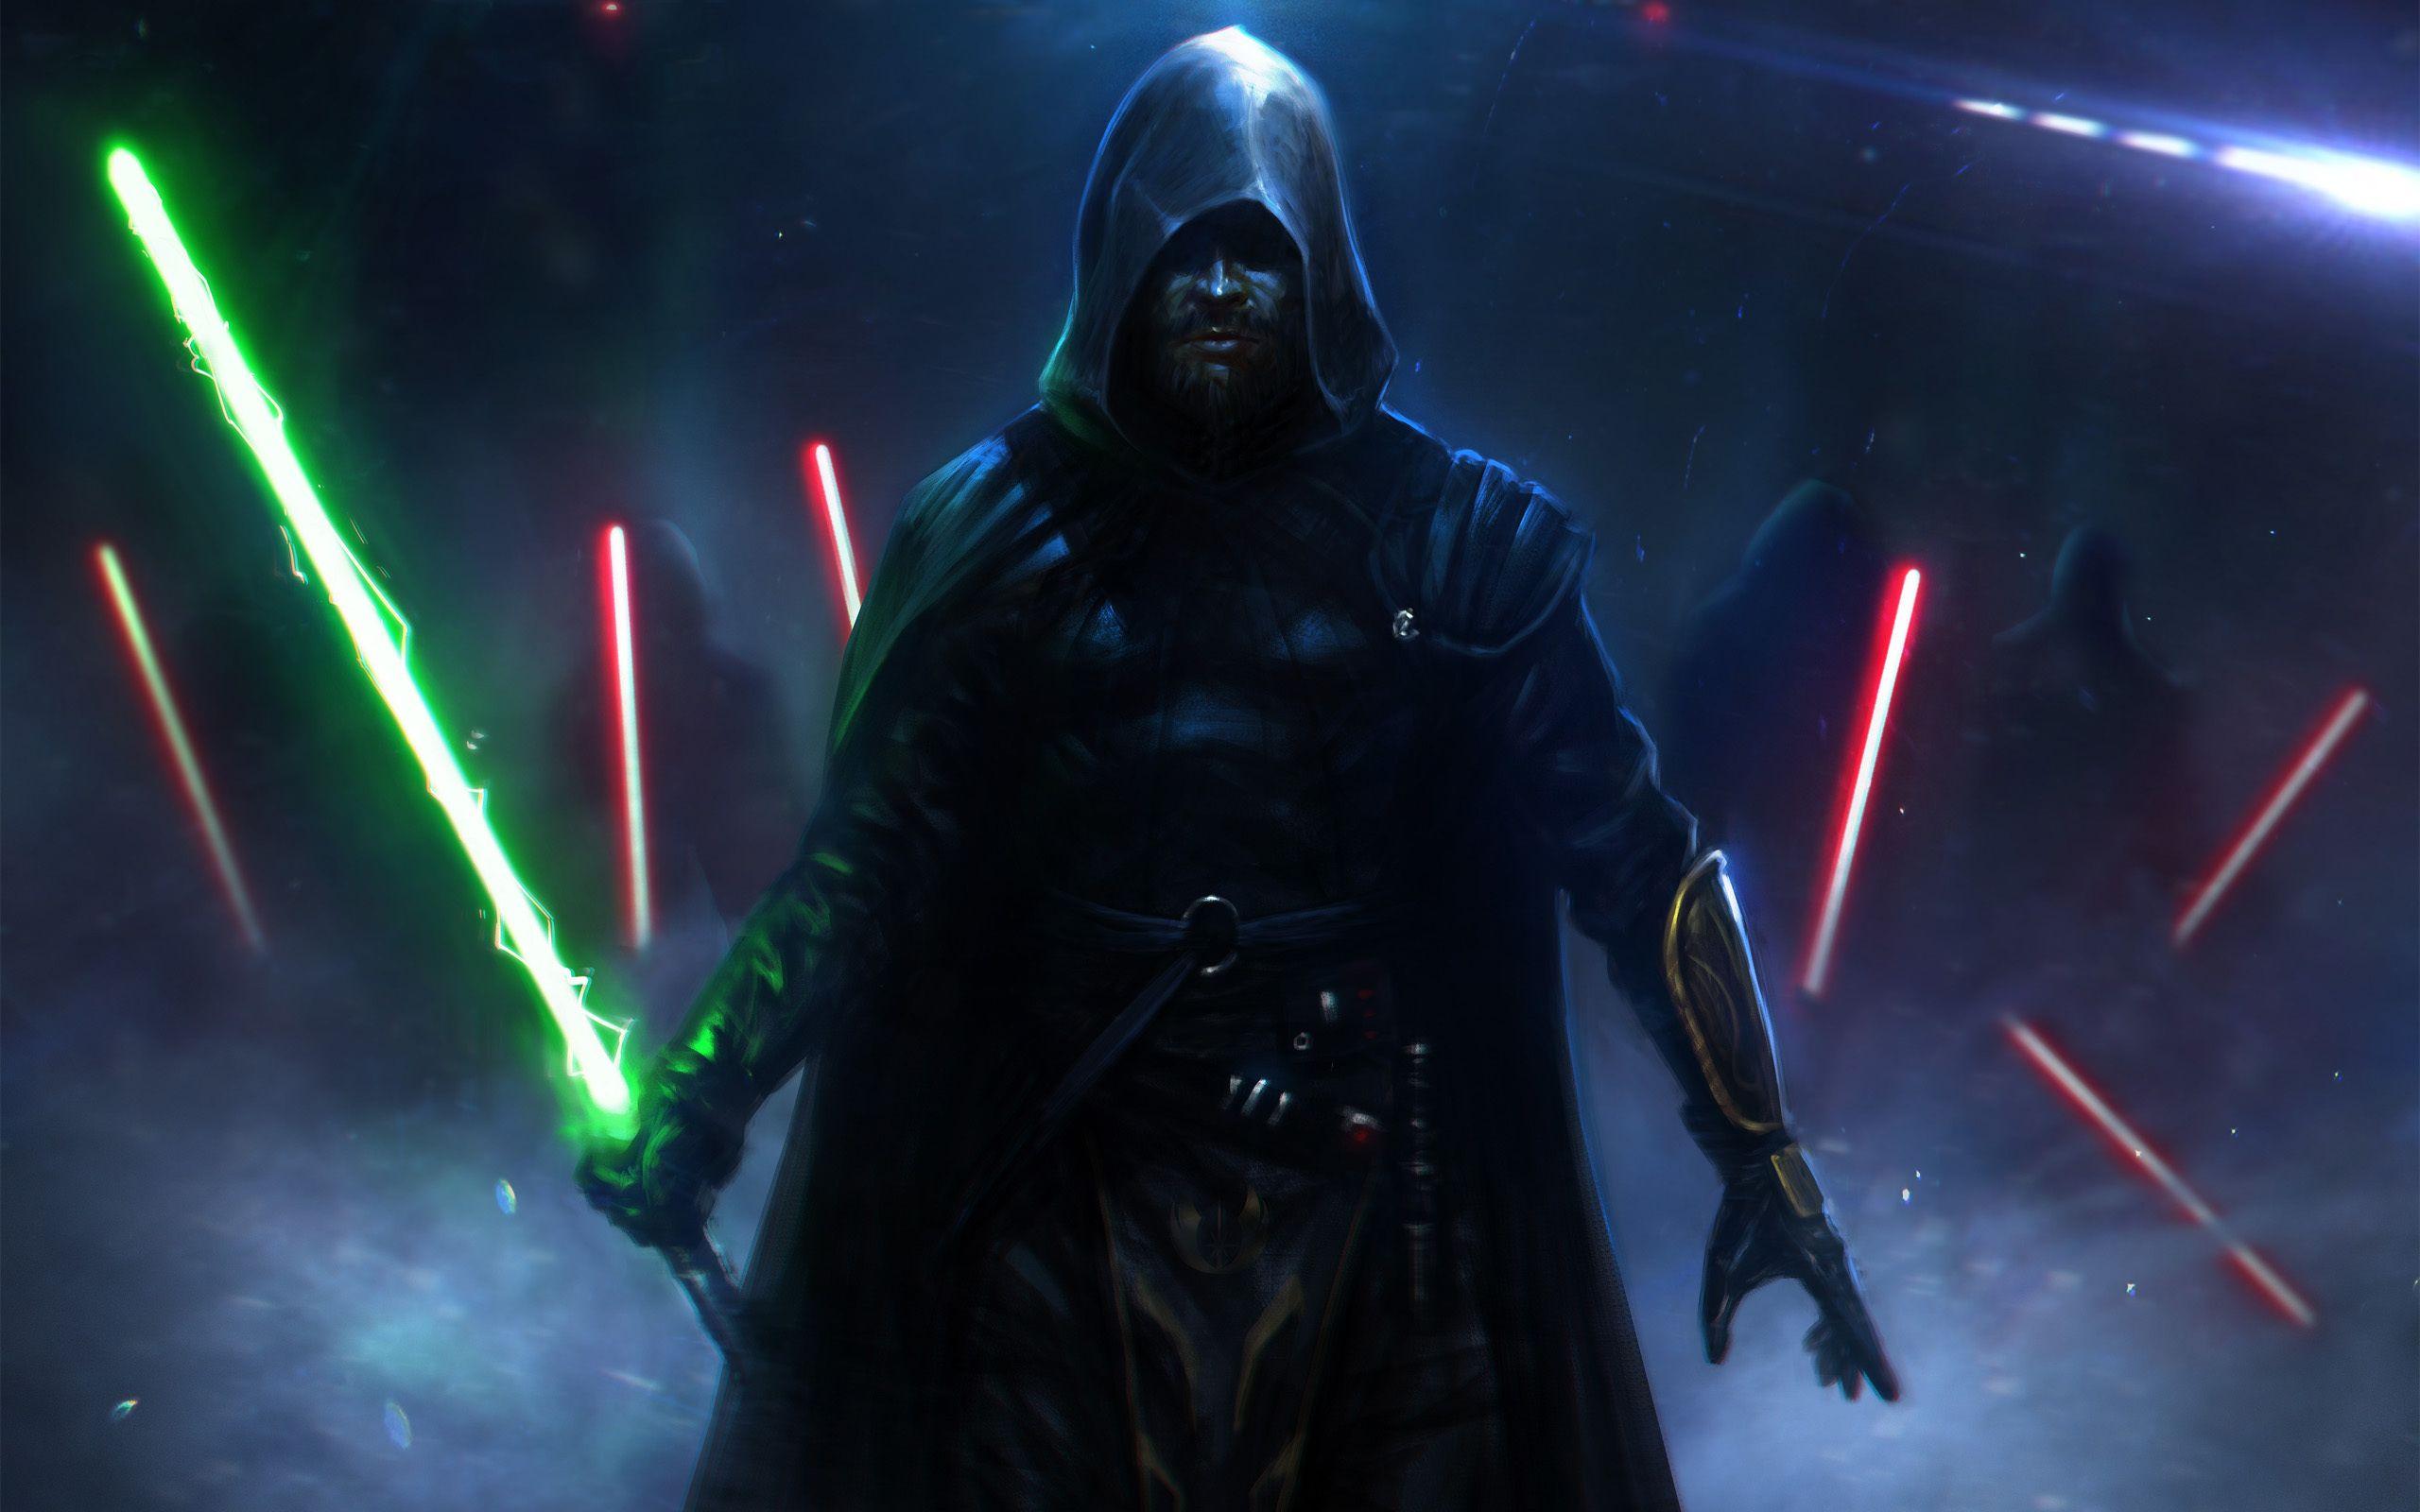 Wallpaper of Star wars Episode VII Luke Skywalker Desktop Picture